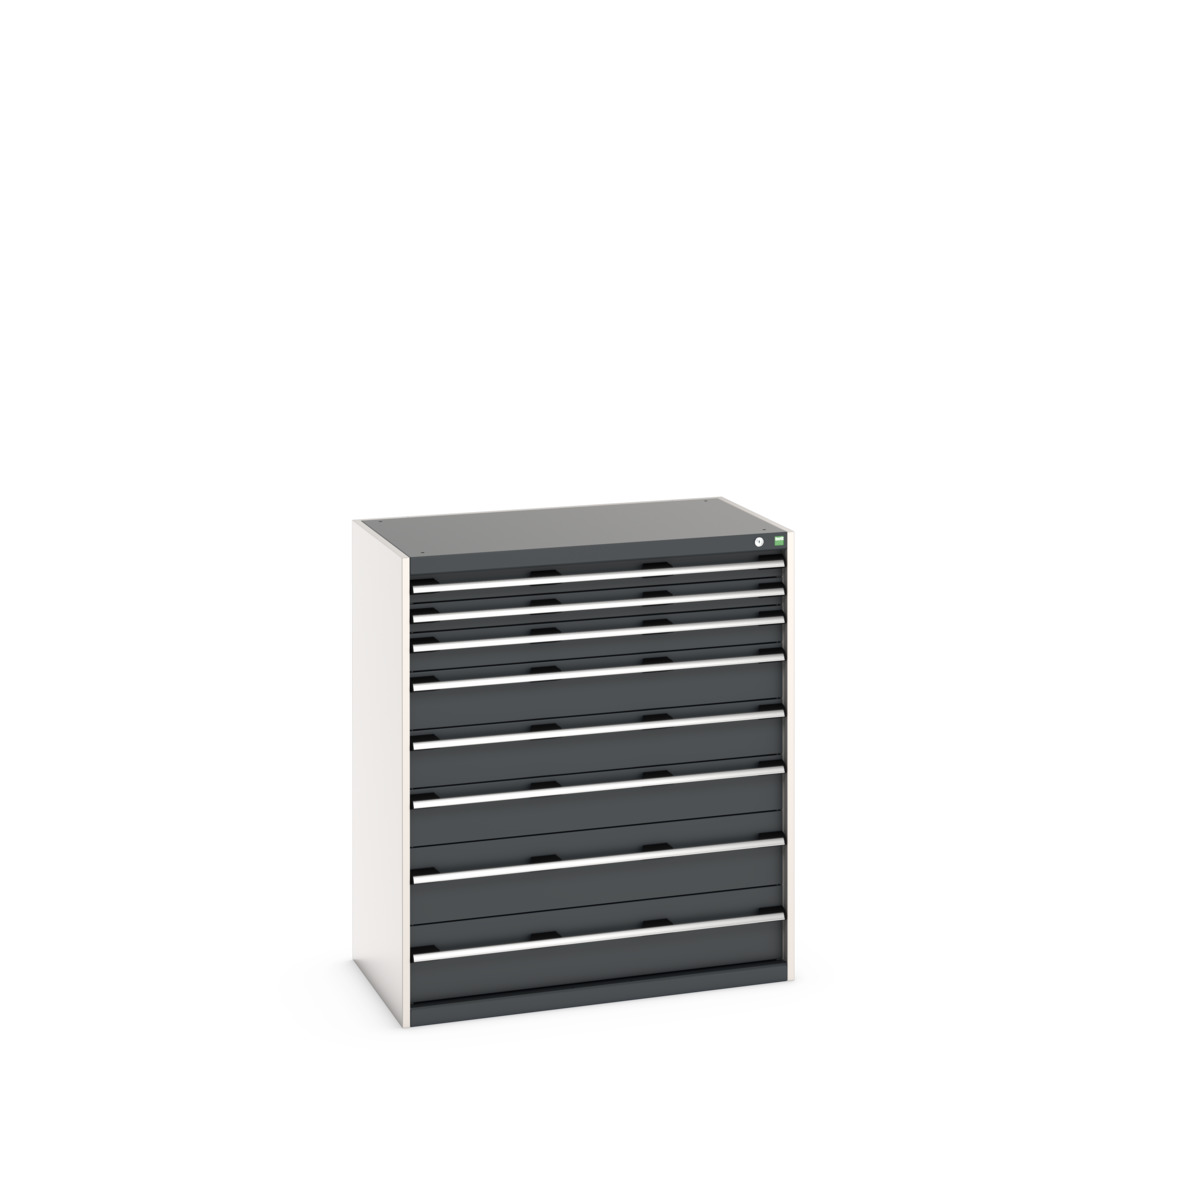 40021040. - cubio drawer cabinet